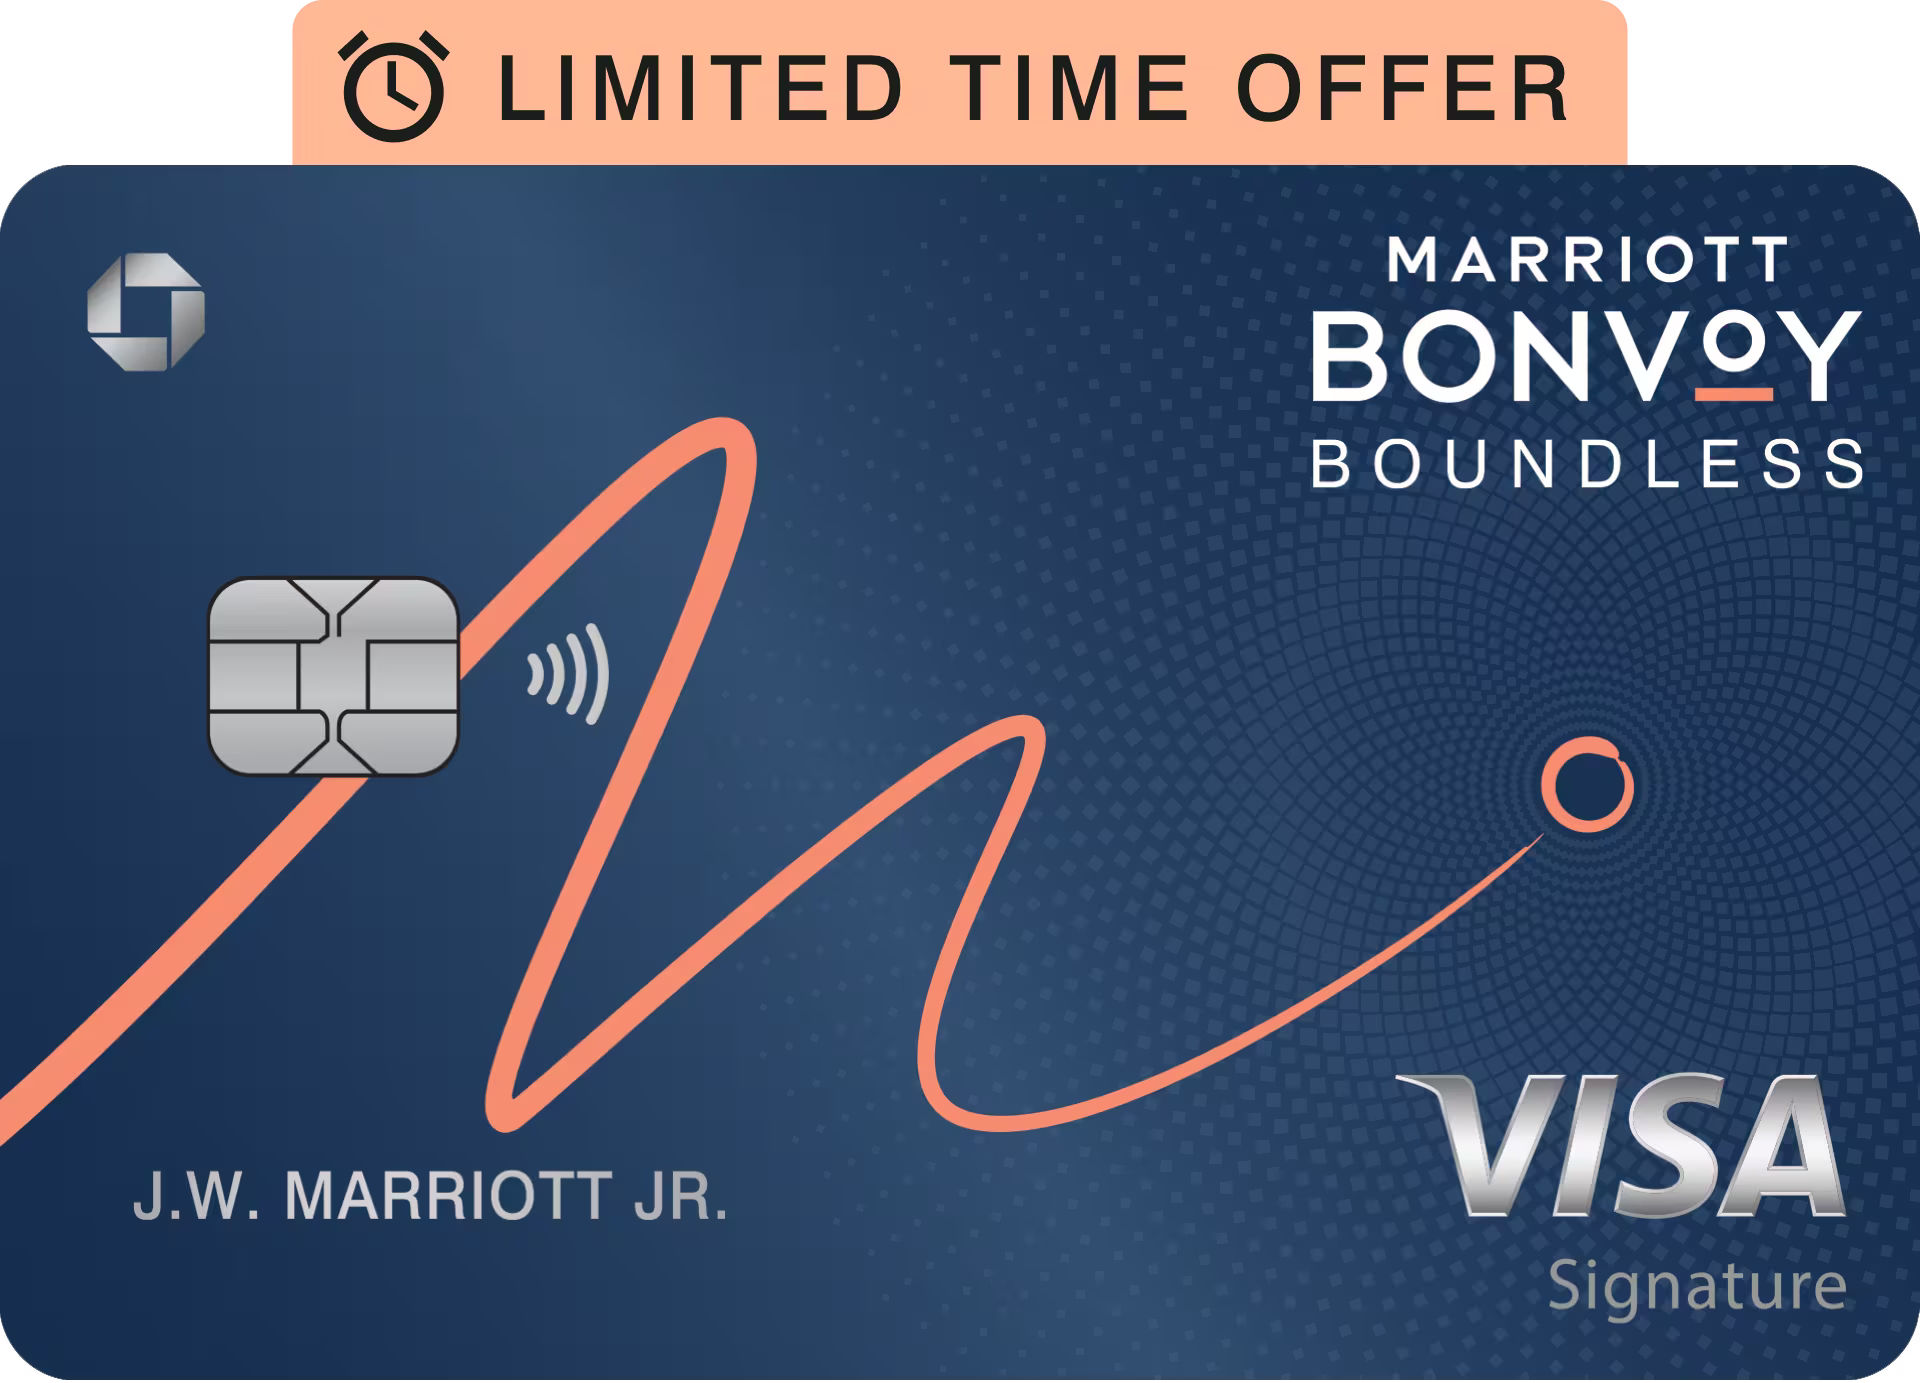 Marriott Bonvoy Boundless Limited Time Offer